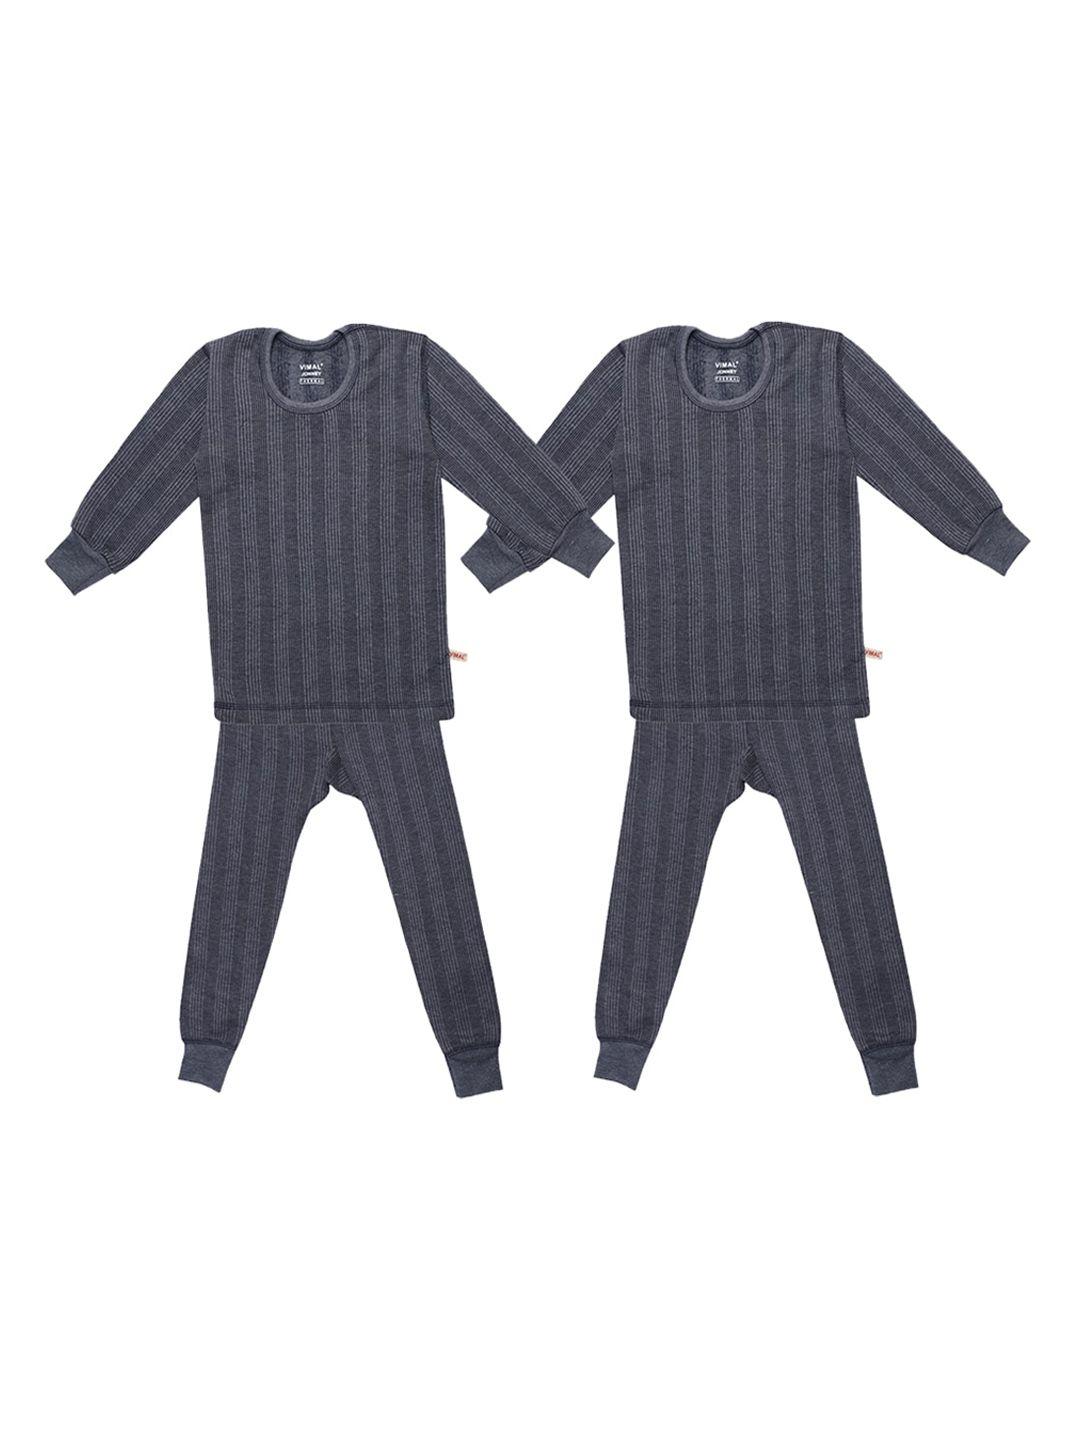 vimal jonney kids pack of 2 grey striped knitted thermal set